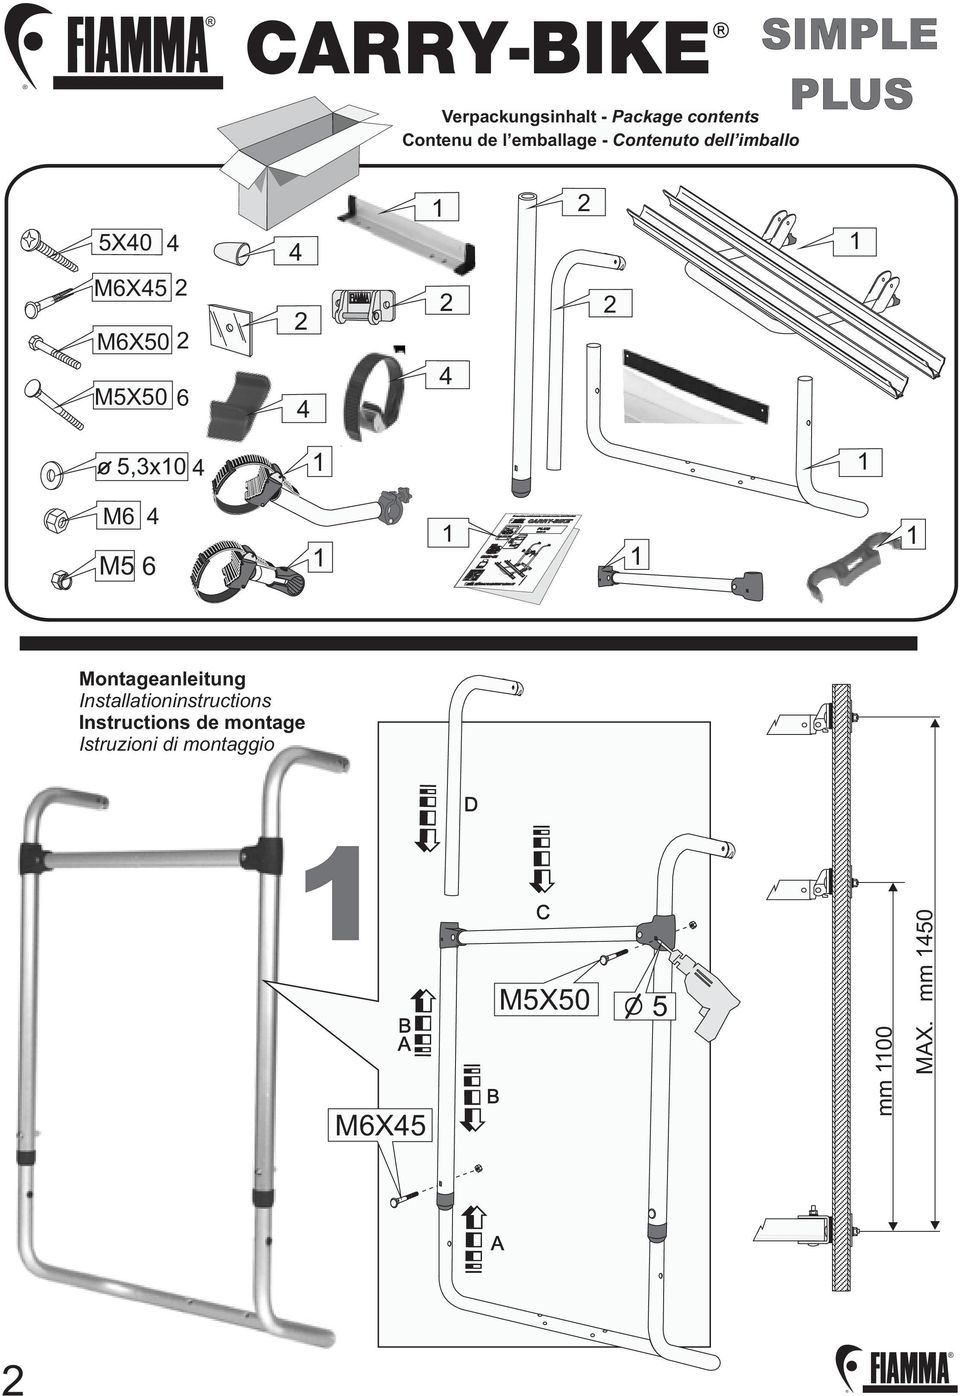 5,3x0 M6 M5 6 Montageanleitung Installationinstructions Instructions